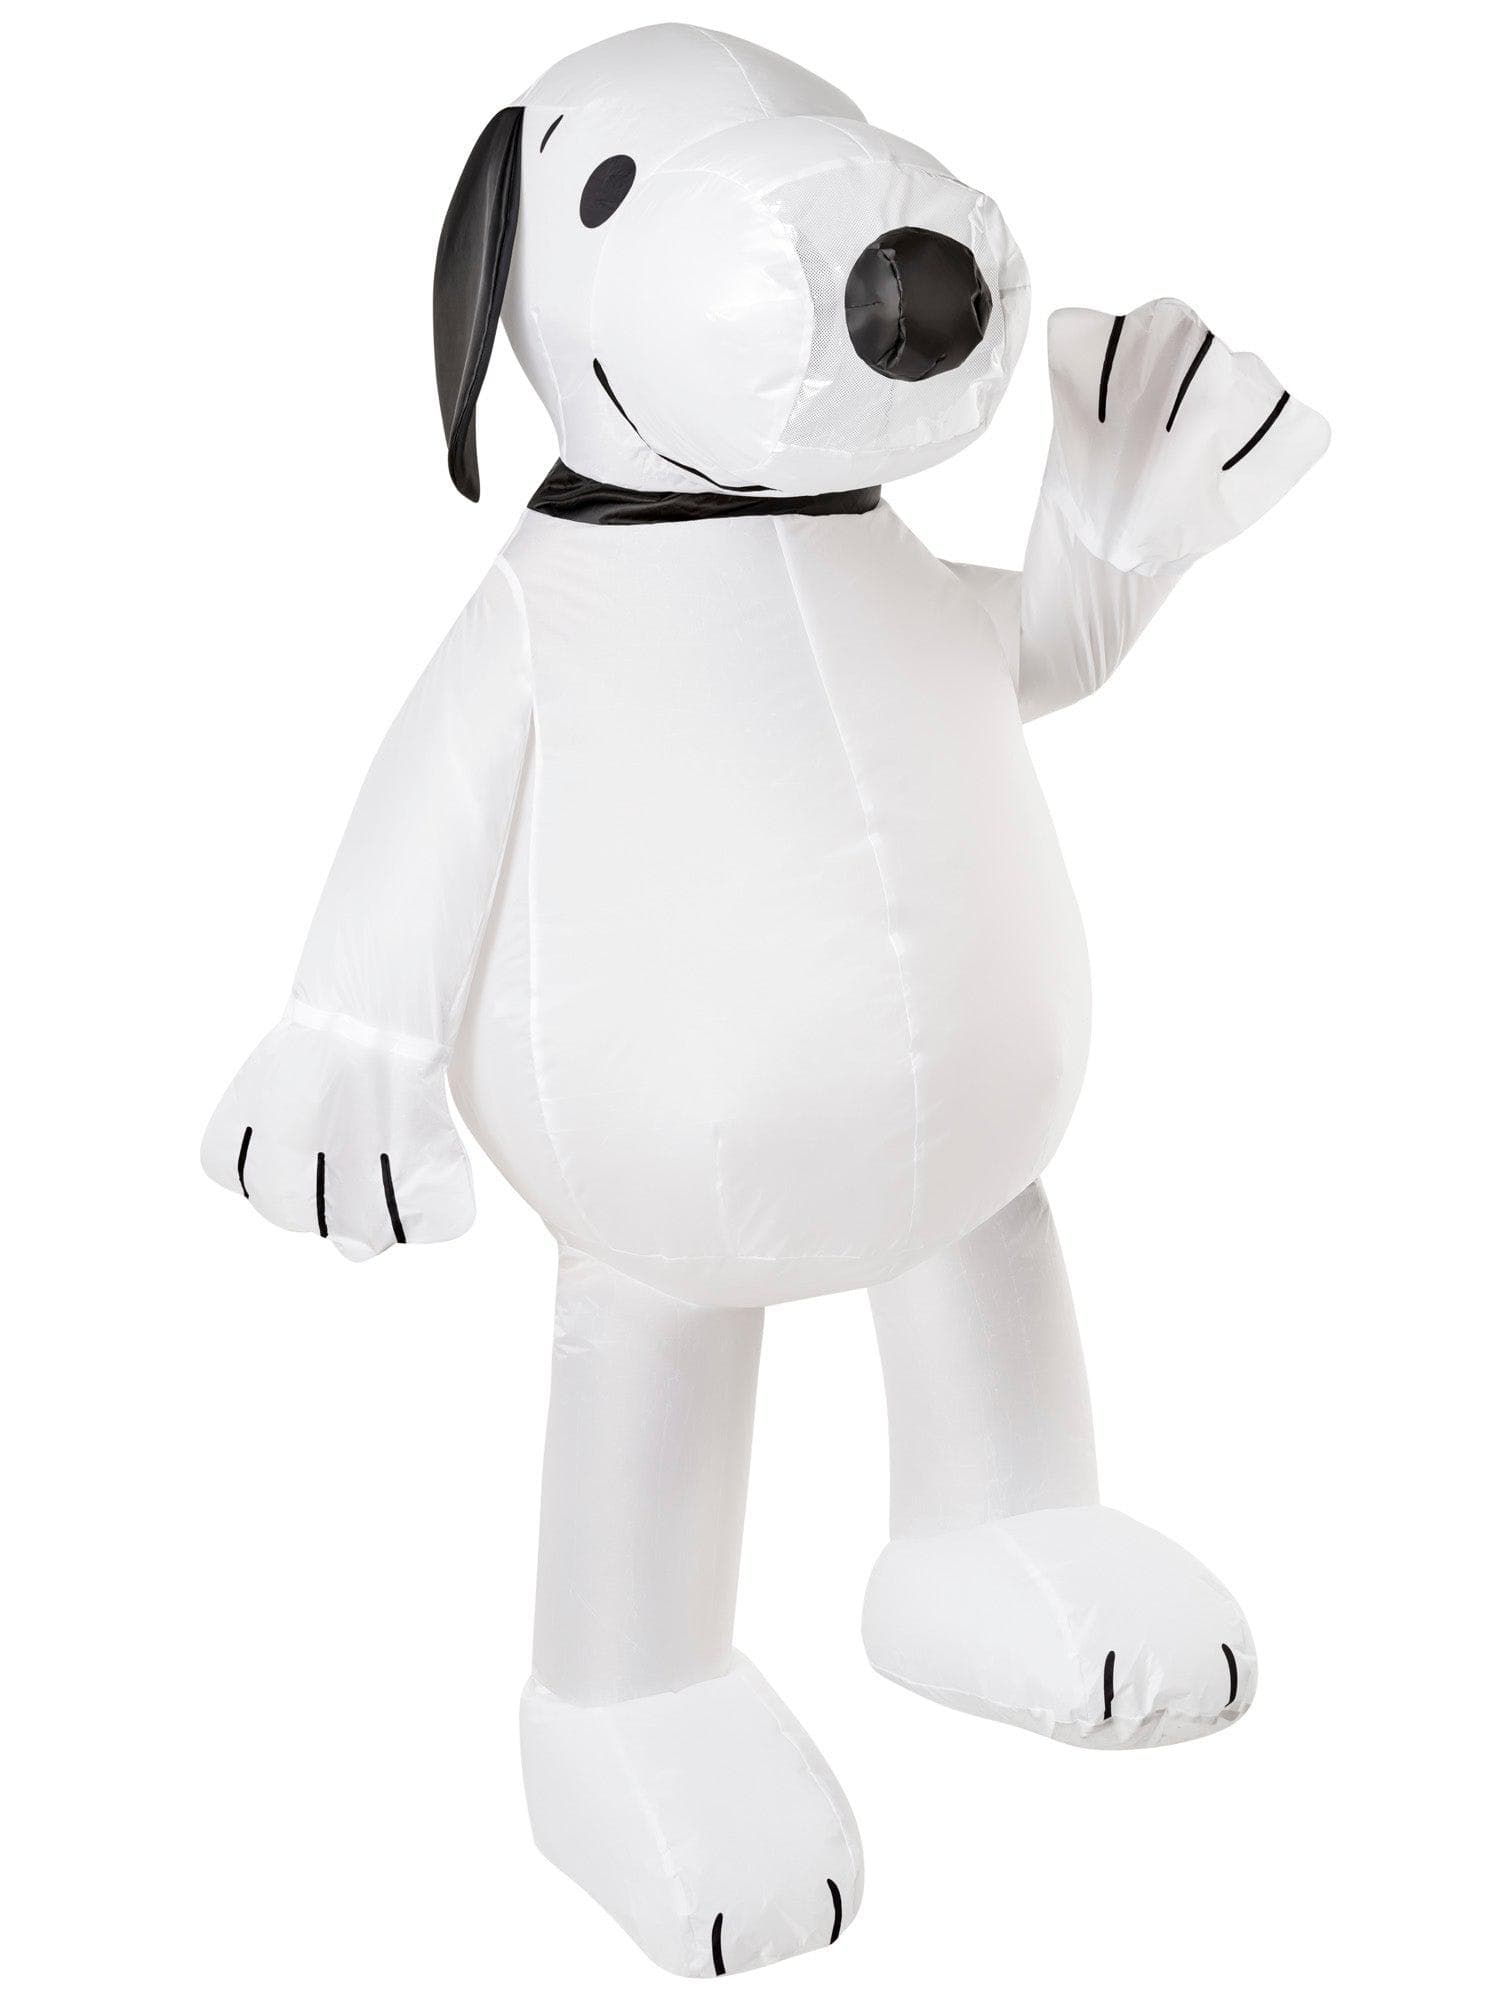 Adult Peanuts Snoopy Inflatable Costume - costumes.com